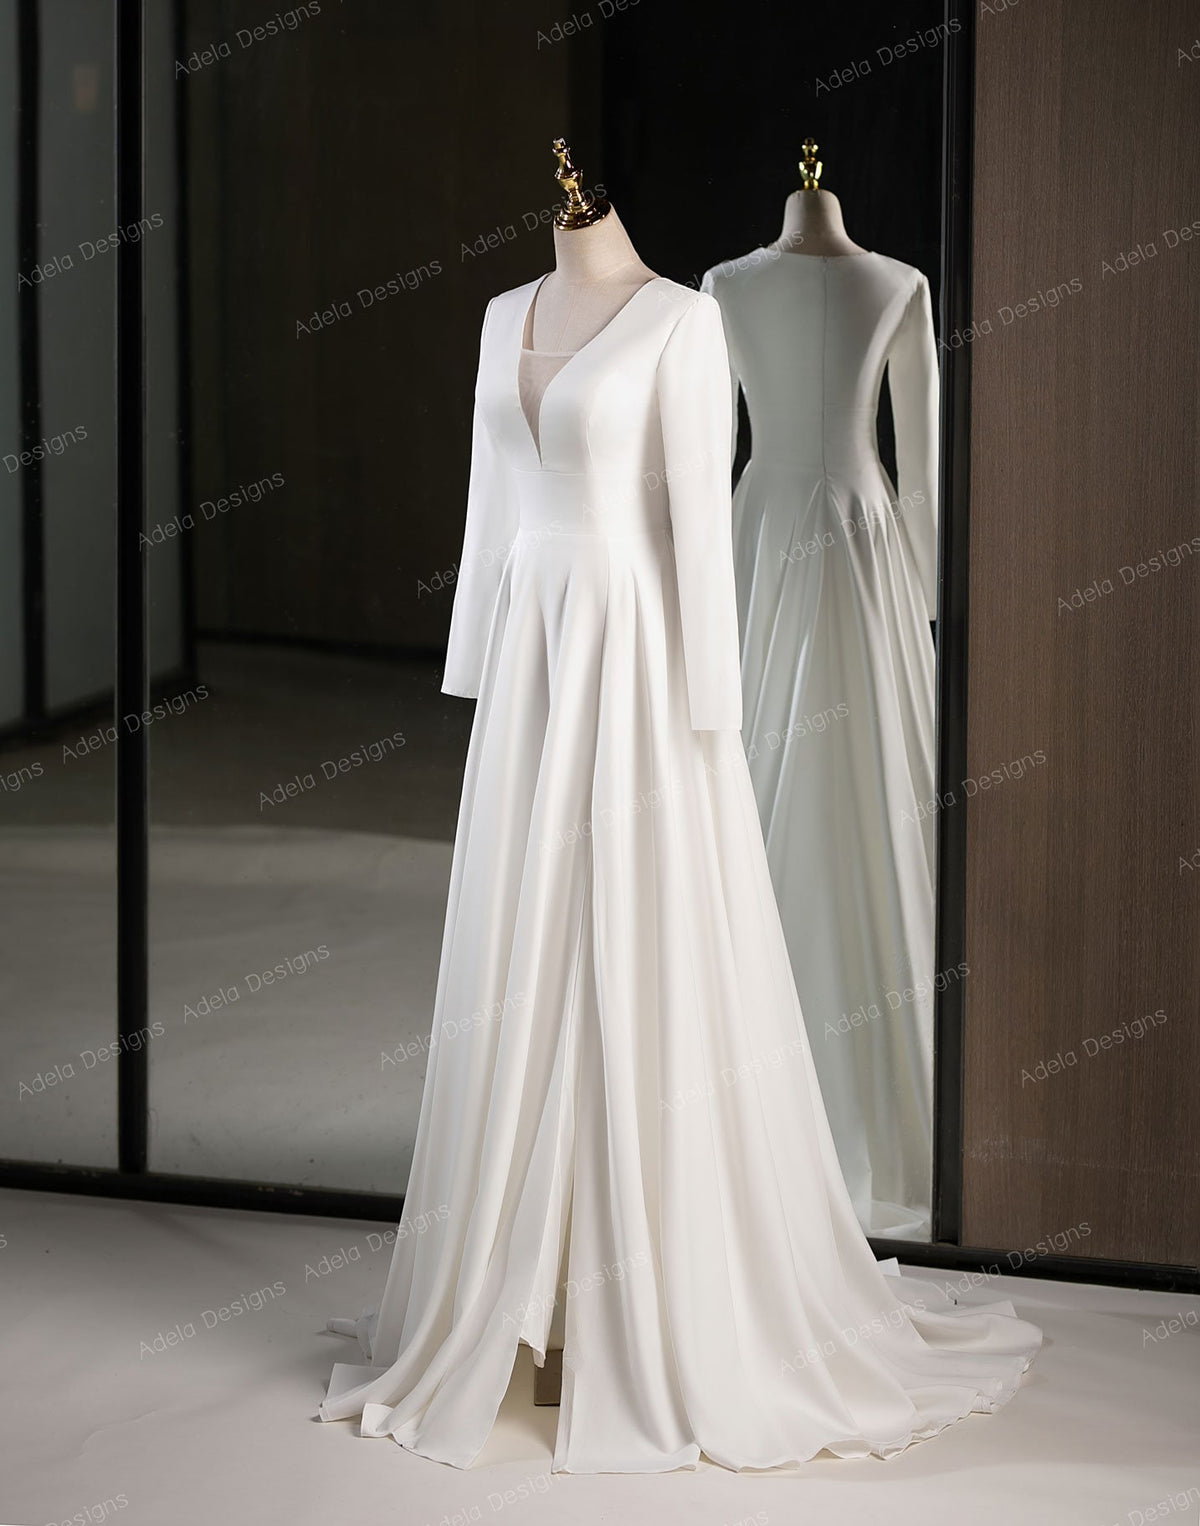 Modest Crepe Long Sleeve Bridal Gown Wedding Dress Minimalist Aline Silhouette Low V Neckline Covered Back Side Slit